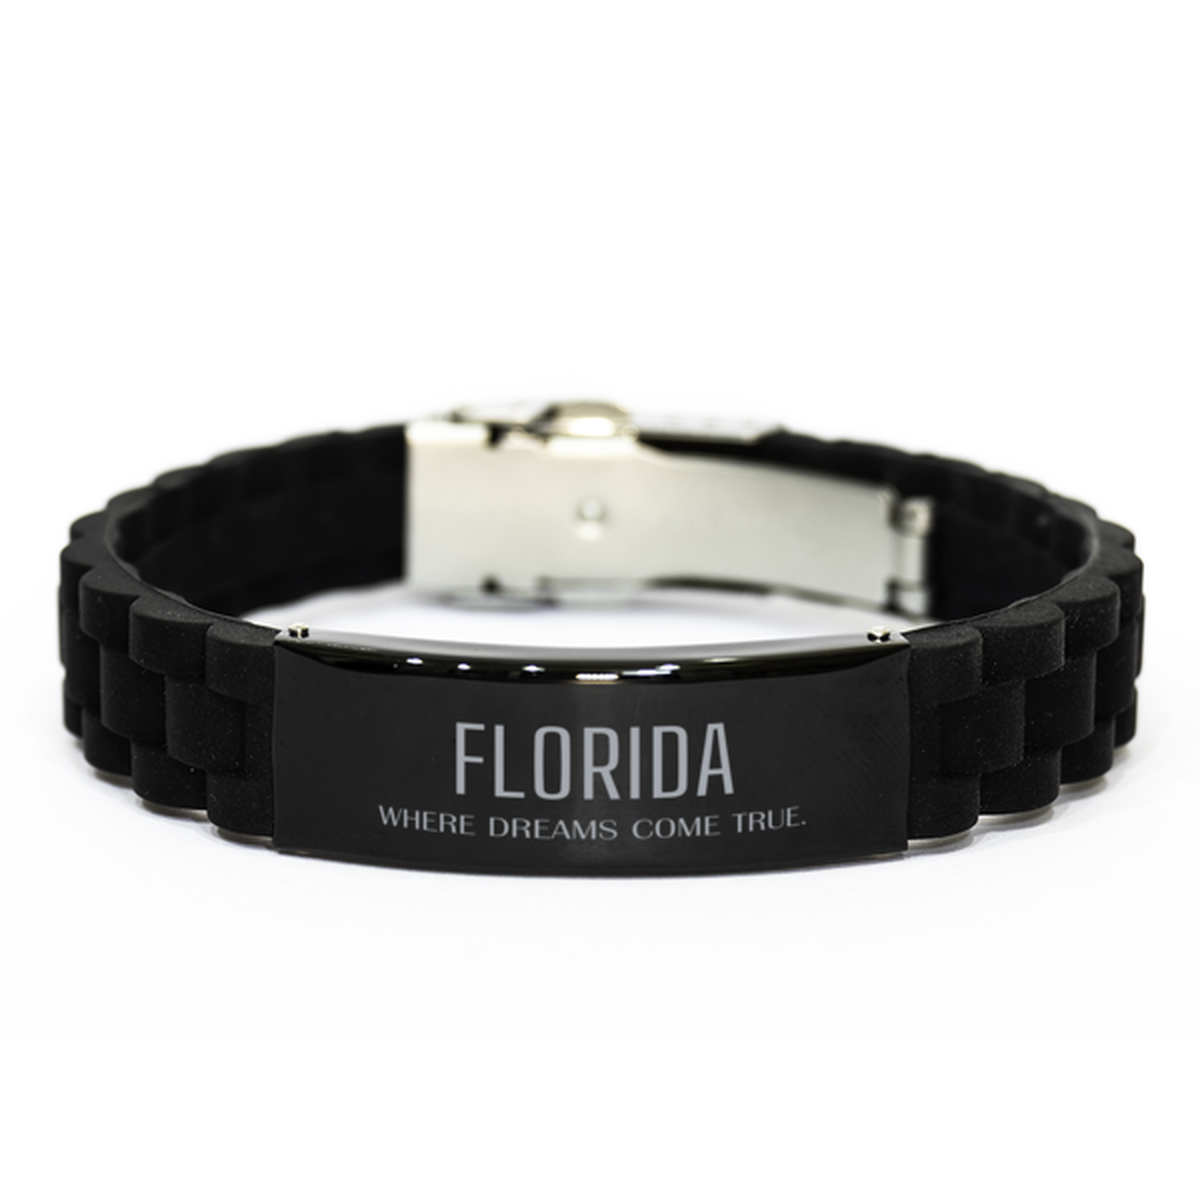 Love Florida State Black Glidelock Clasp Bracelet, Florida Where dreams come true, Birthday Inspirational Gifts For Florida Men, Women, Friends